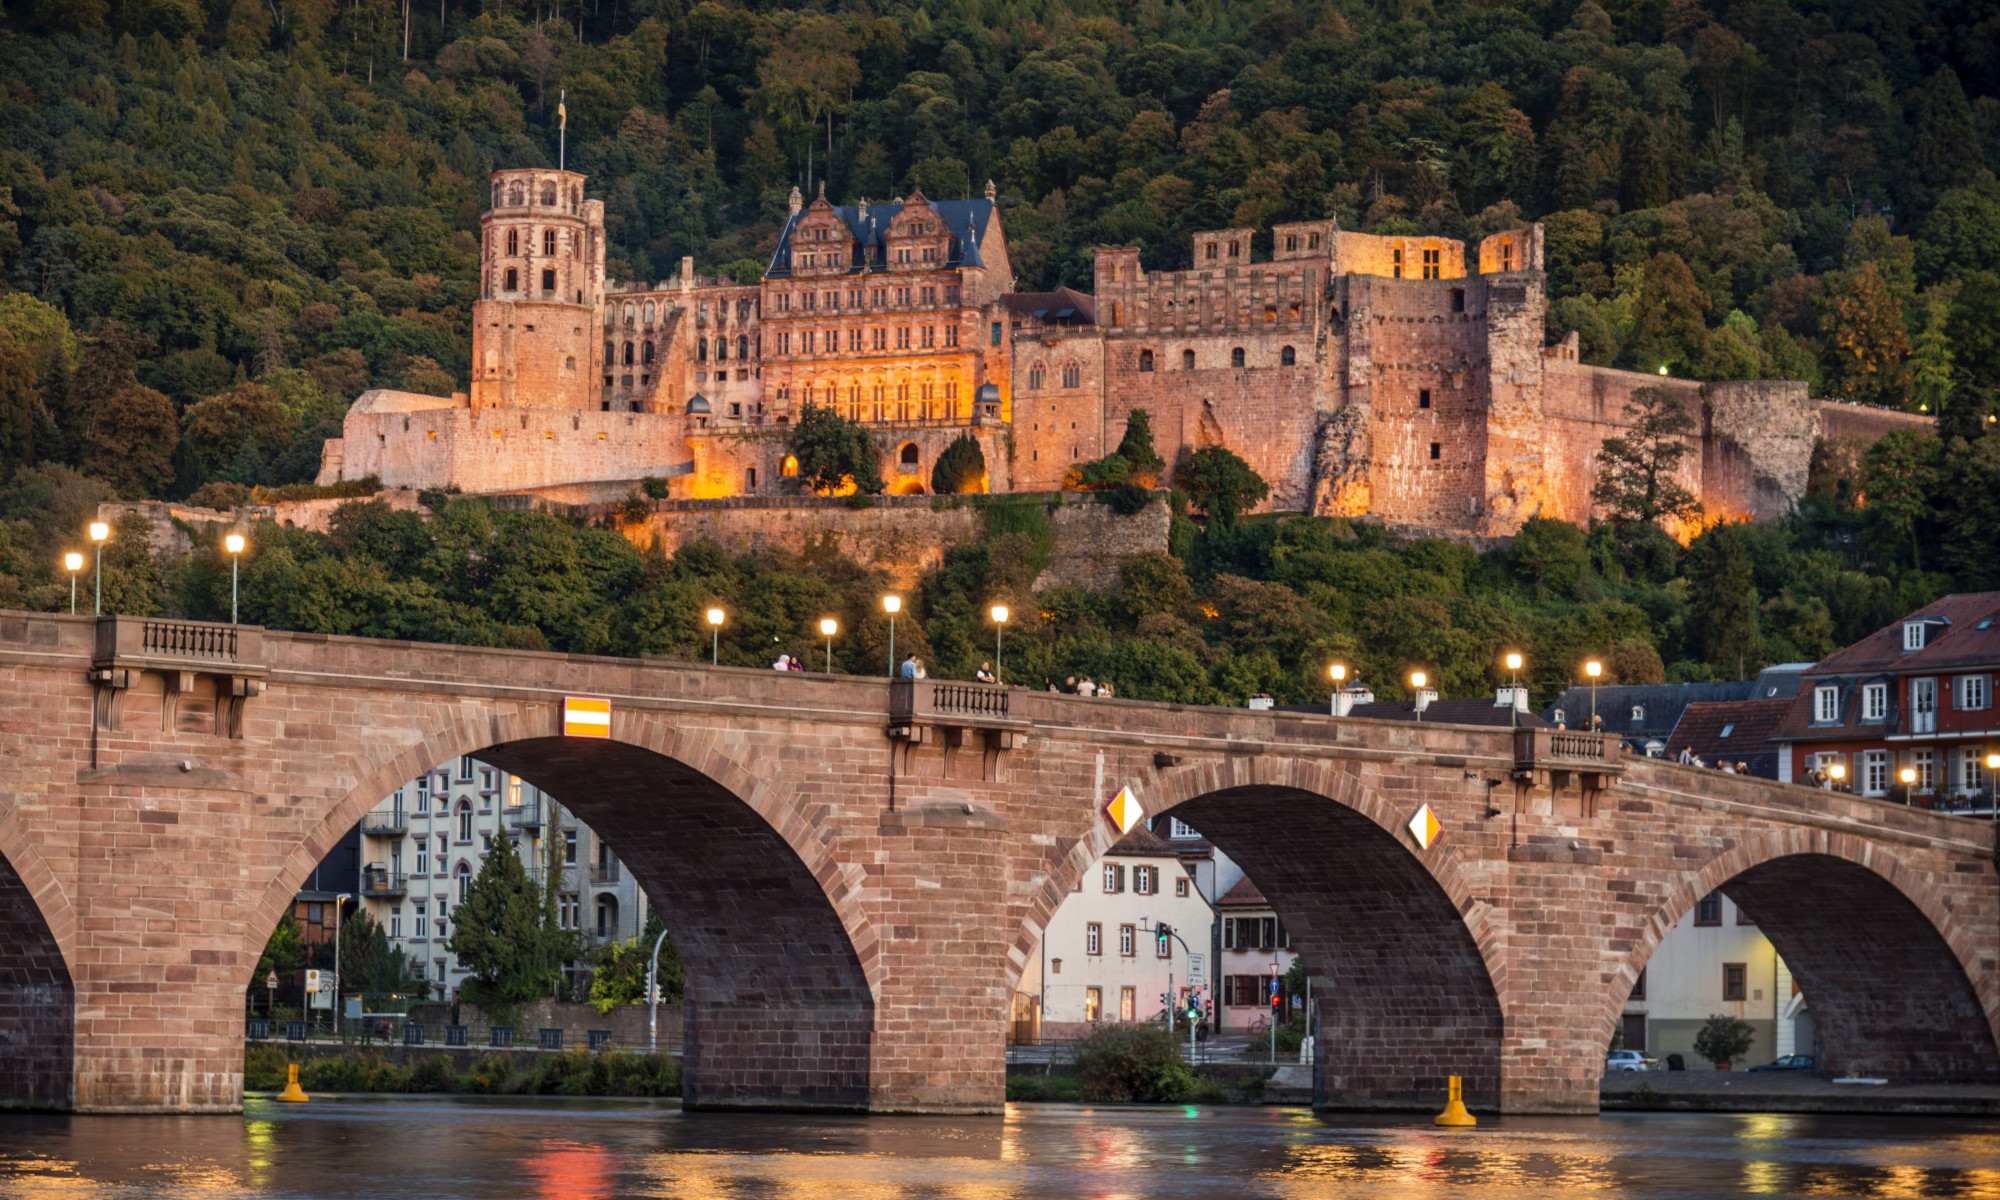 Historic bridge and castle of Heidelberg